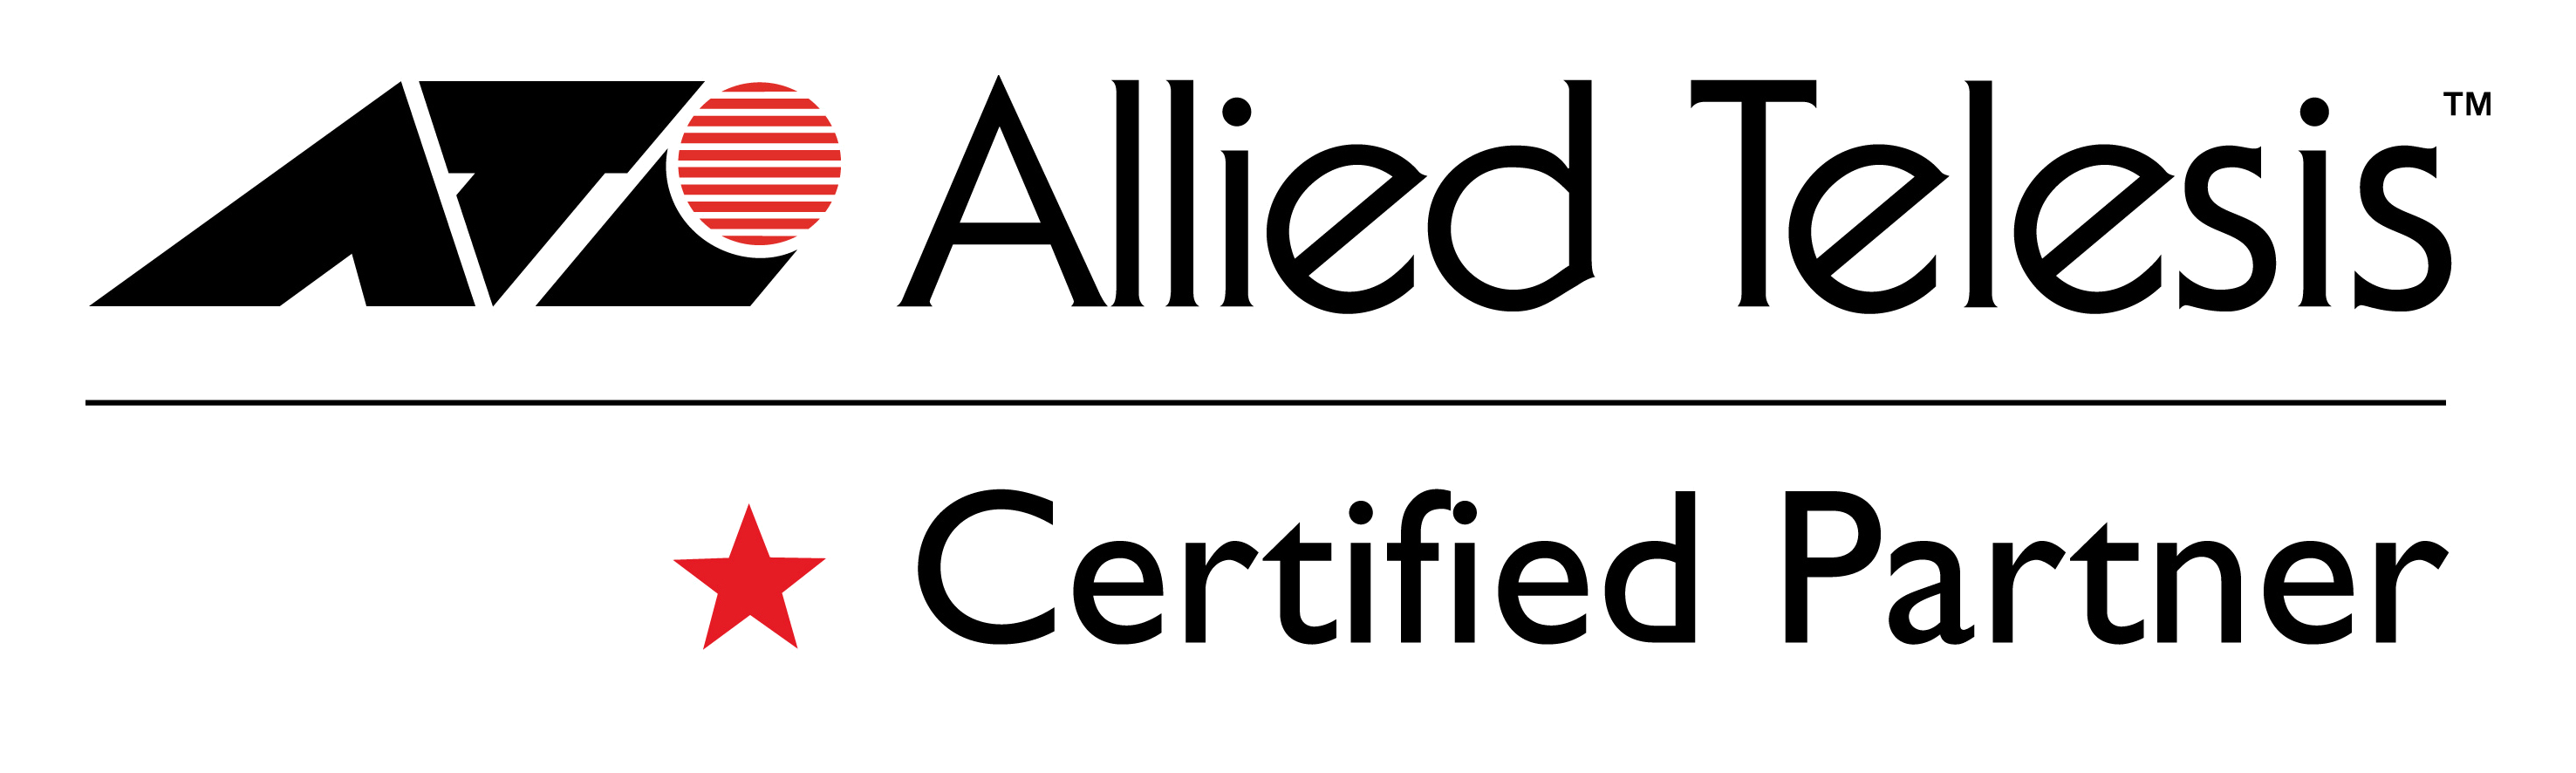 allied telesis certified partner logo #39486